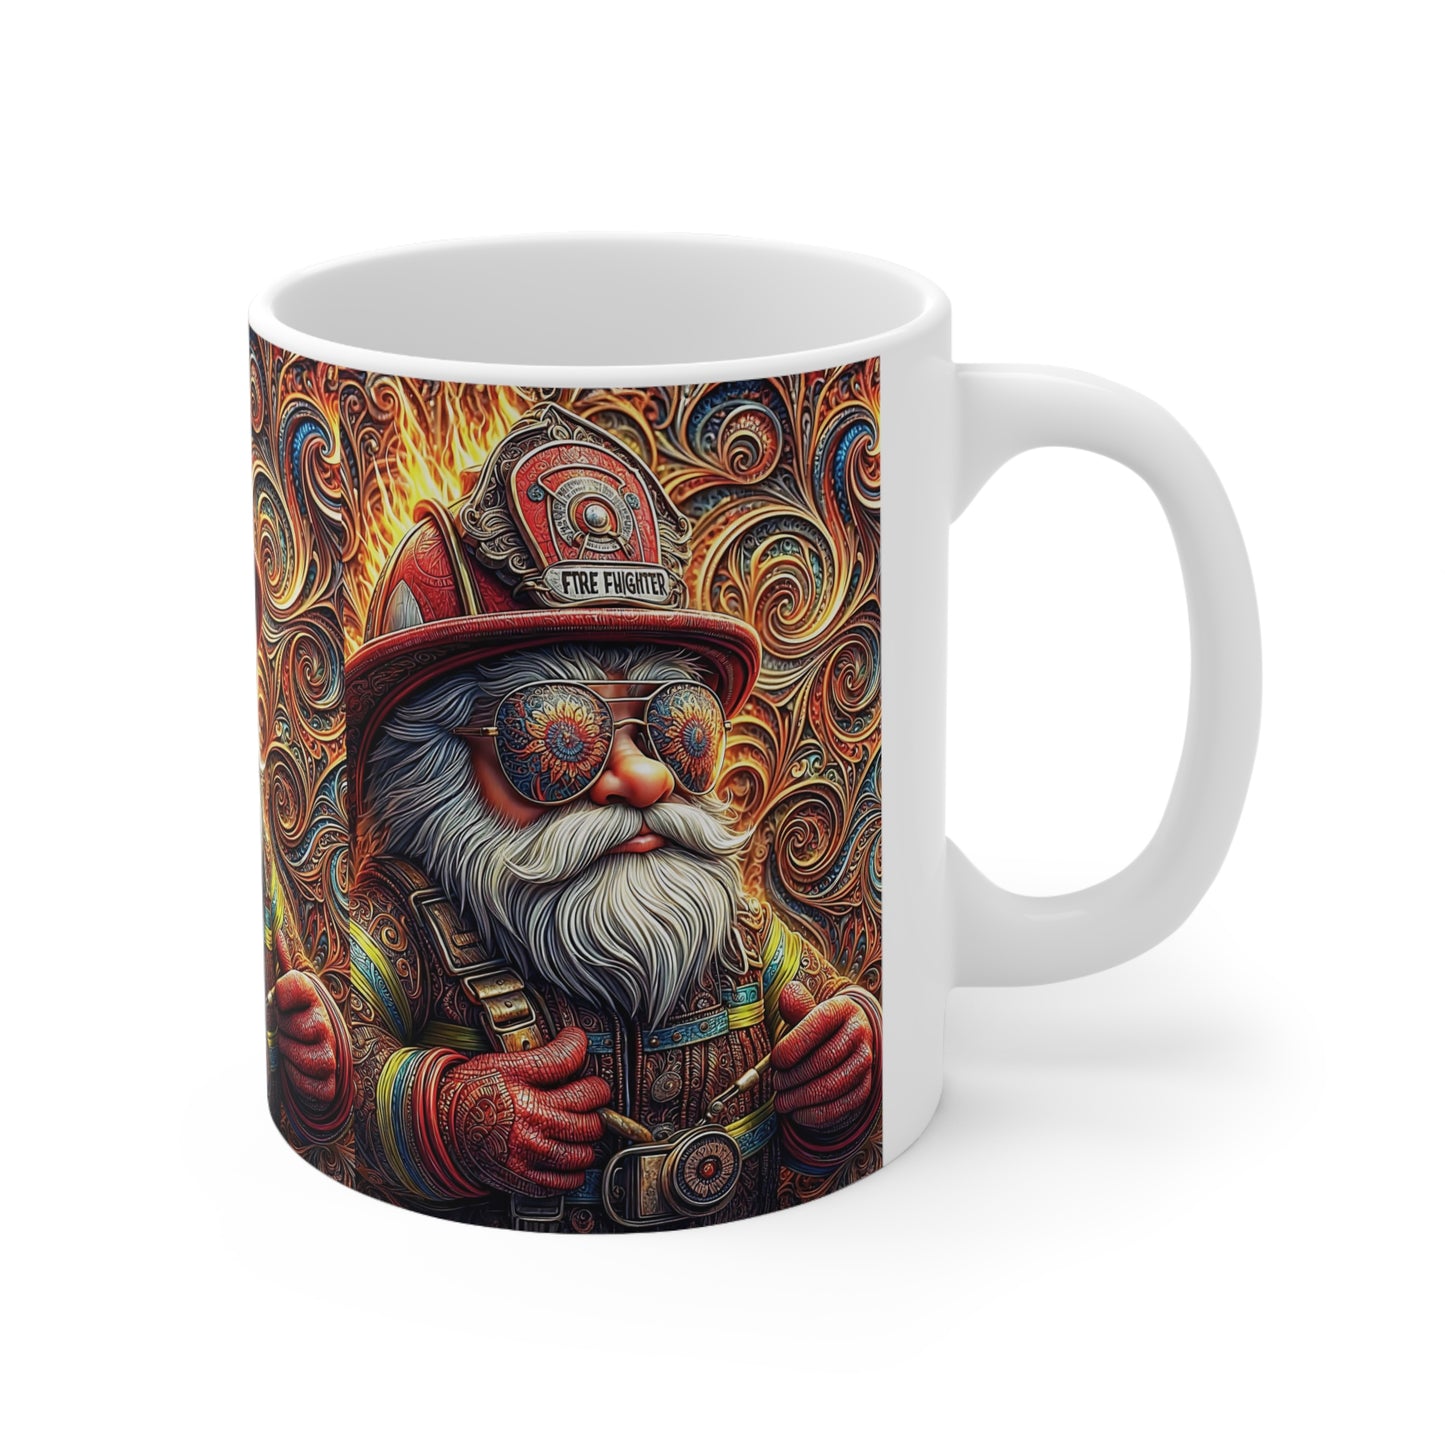 Emberbeard's Mystical Mug Ceramic Mug 11oz